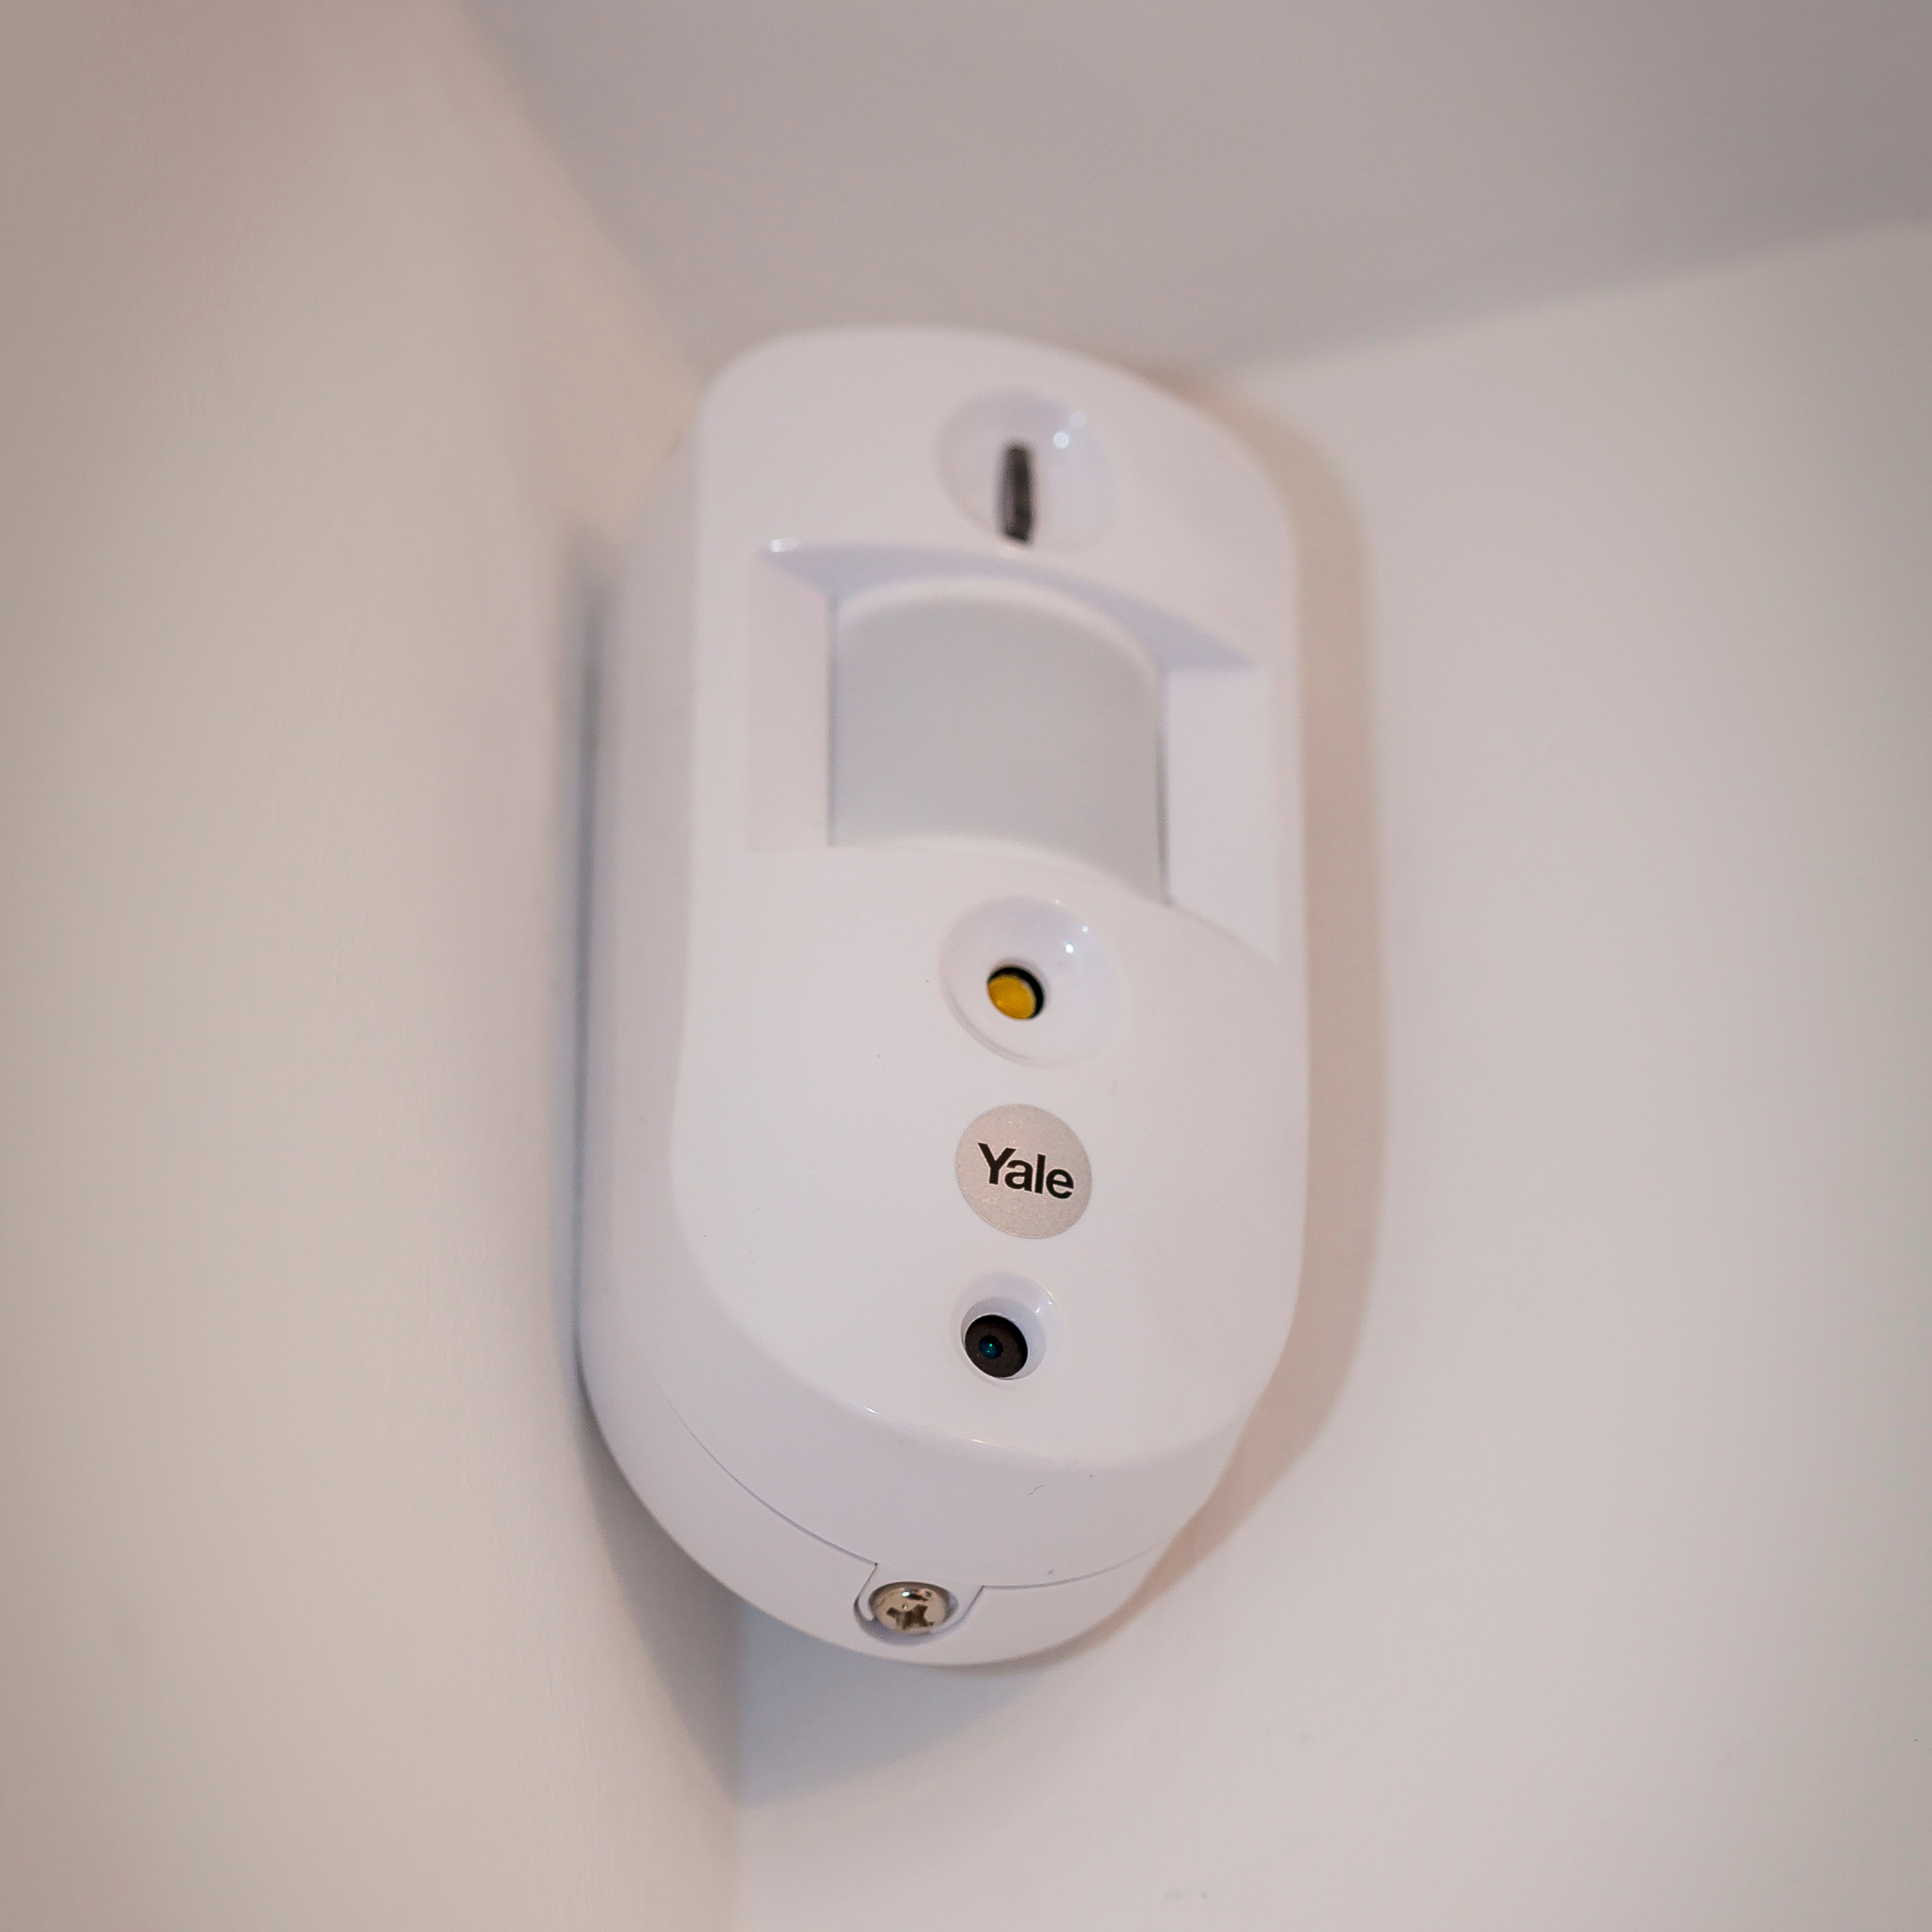 Yale Smart Home Alarm PIR Video Camera